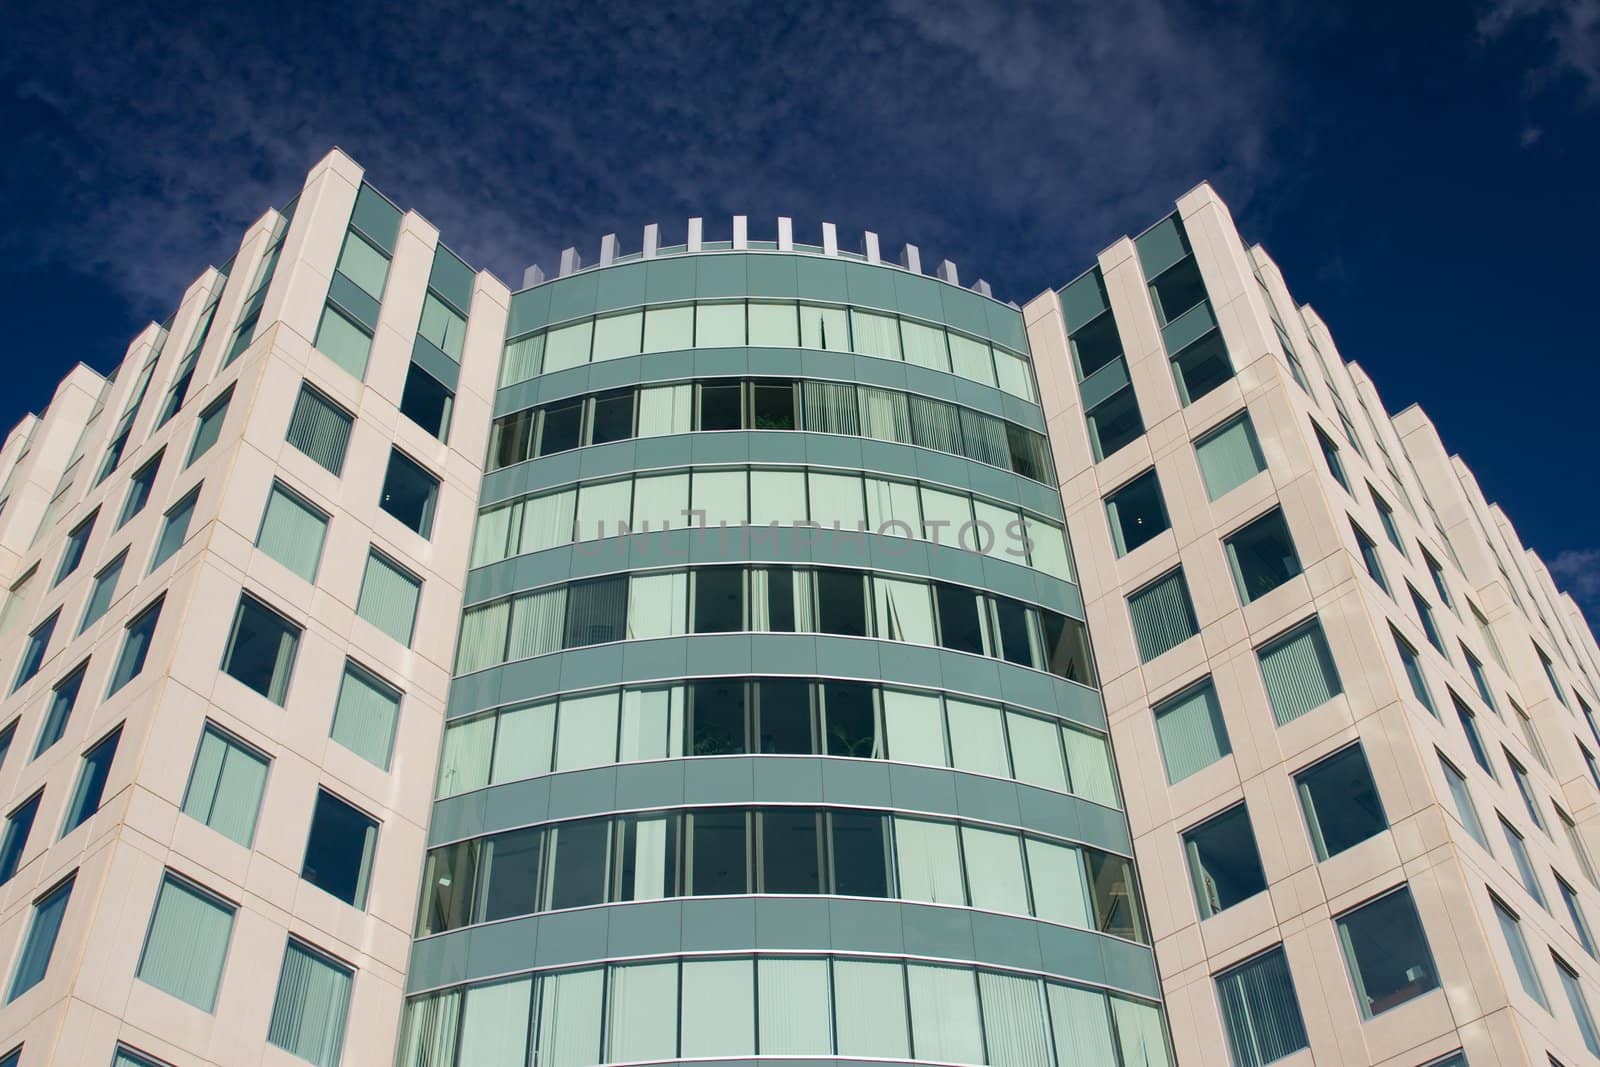 Highrise modern office building against blue sky